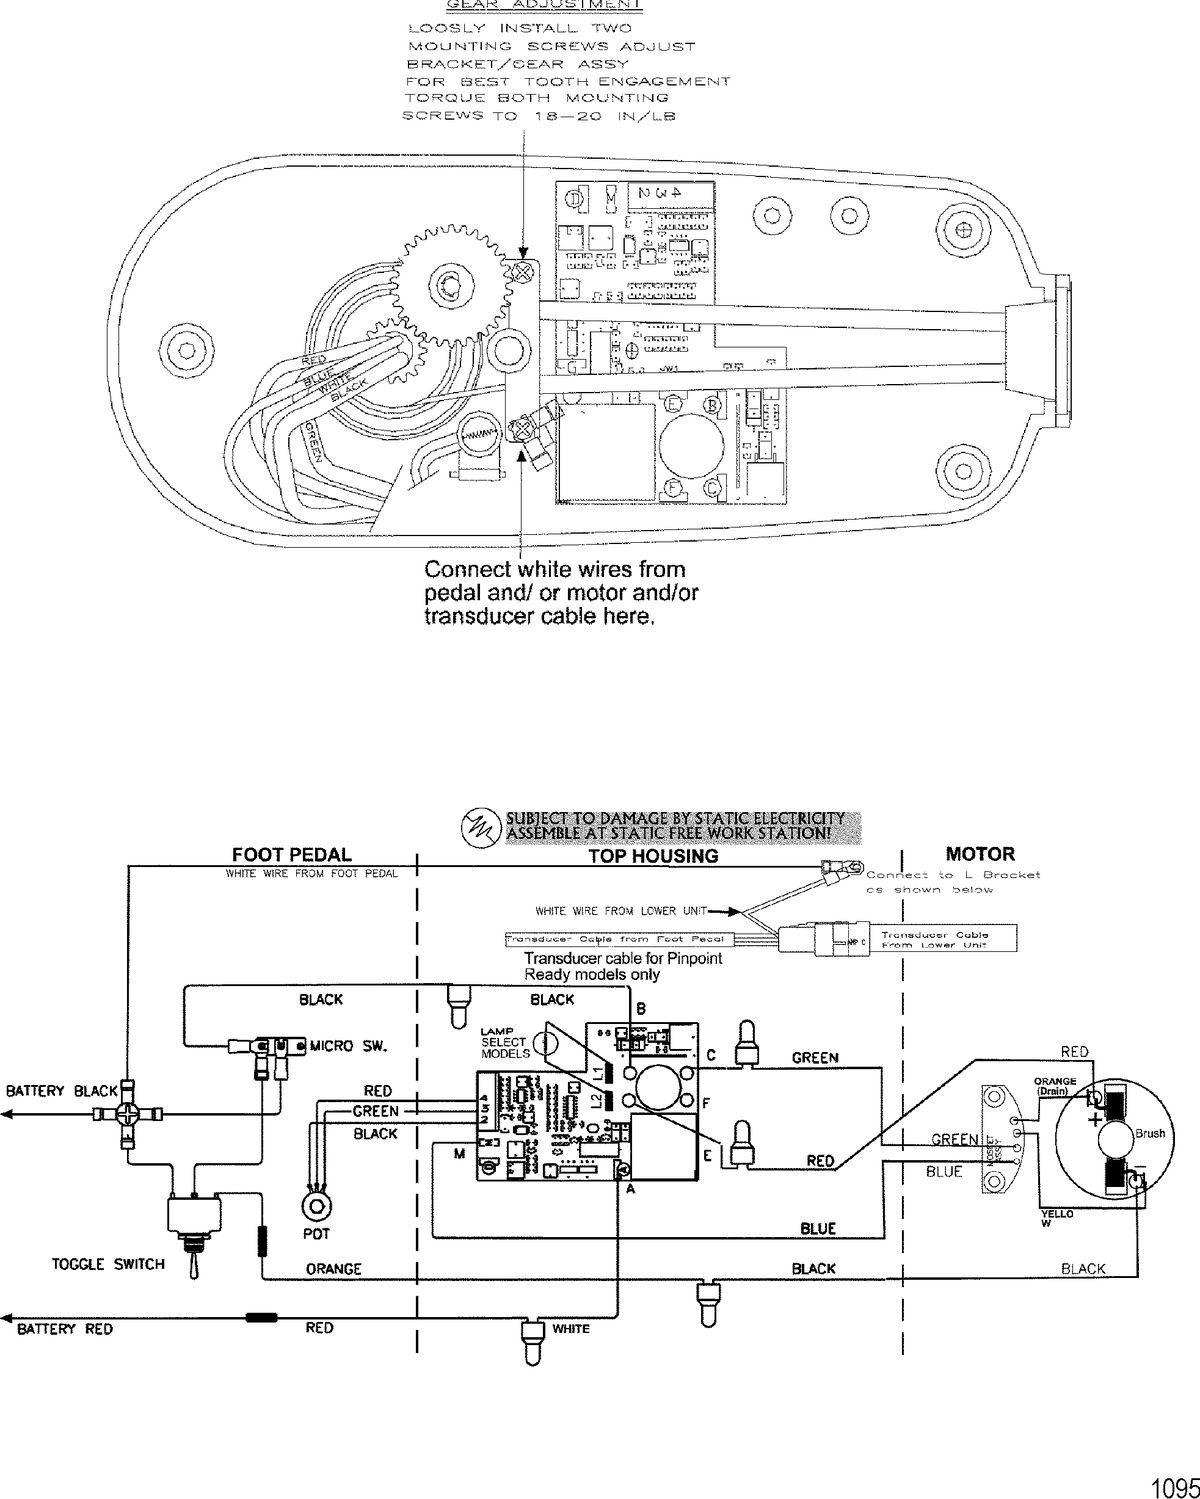 TROLLING MOTOR MOTORGUIDE TOUR EDITION SERIES Wire Diagram(Model TE771VP) (24 Volt)